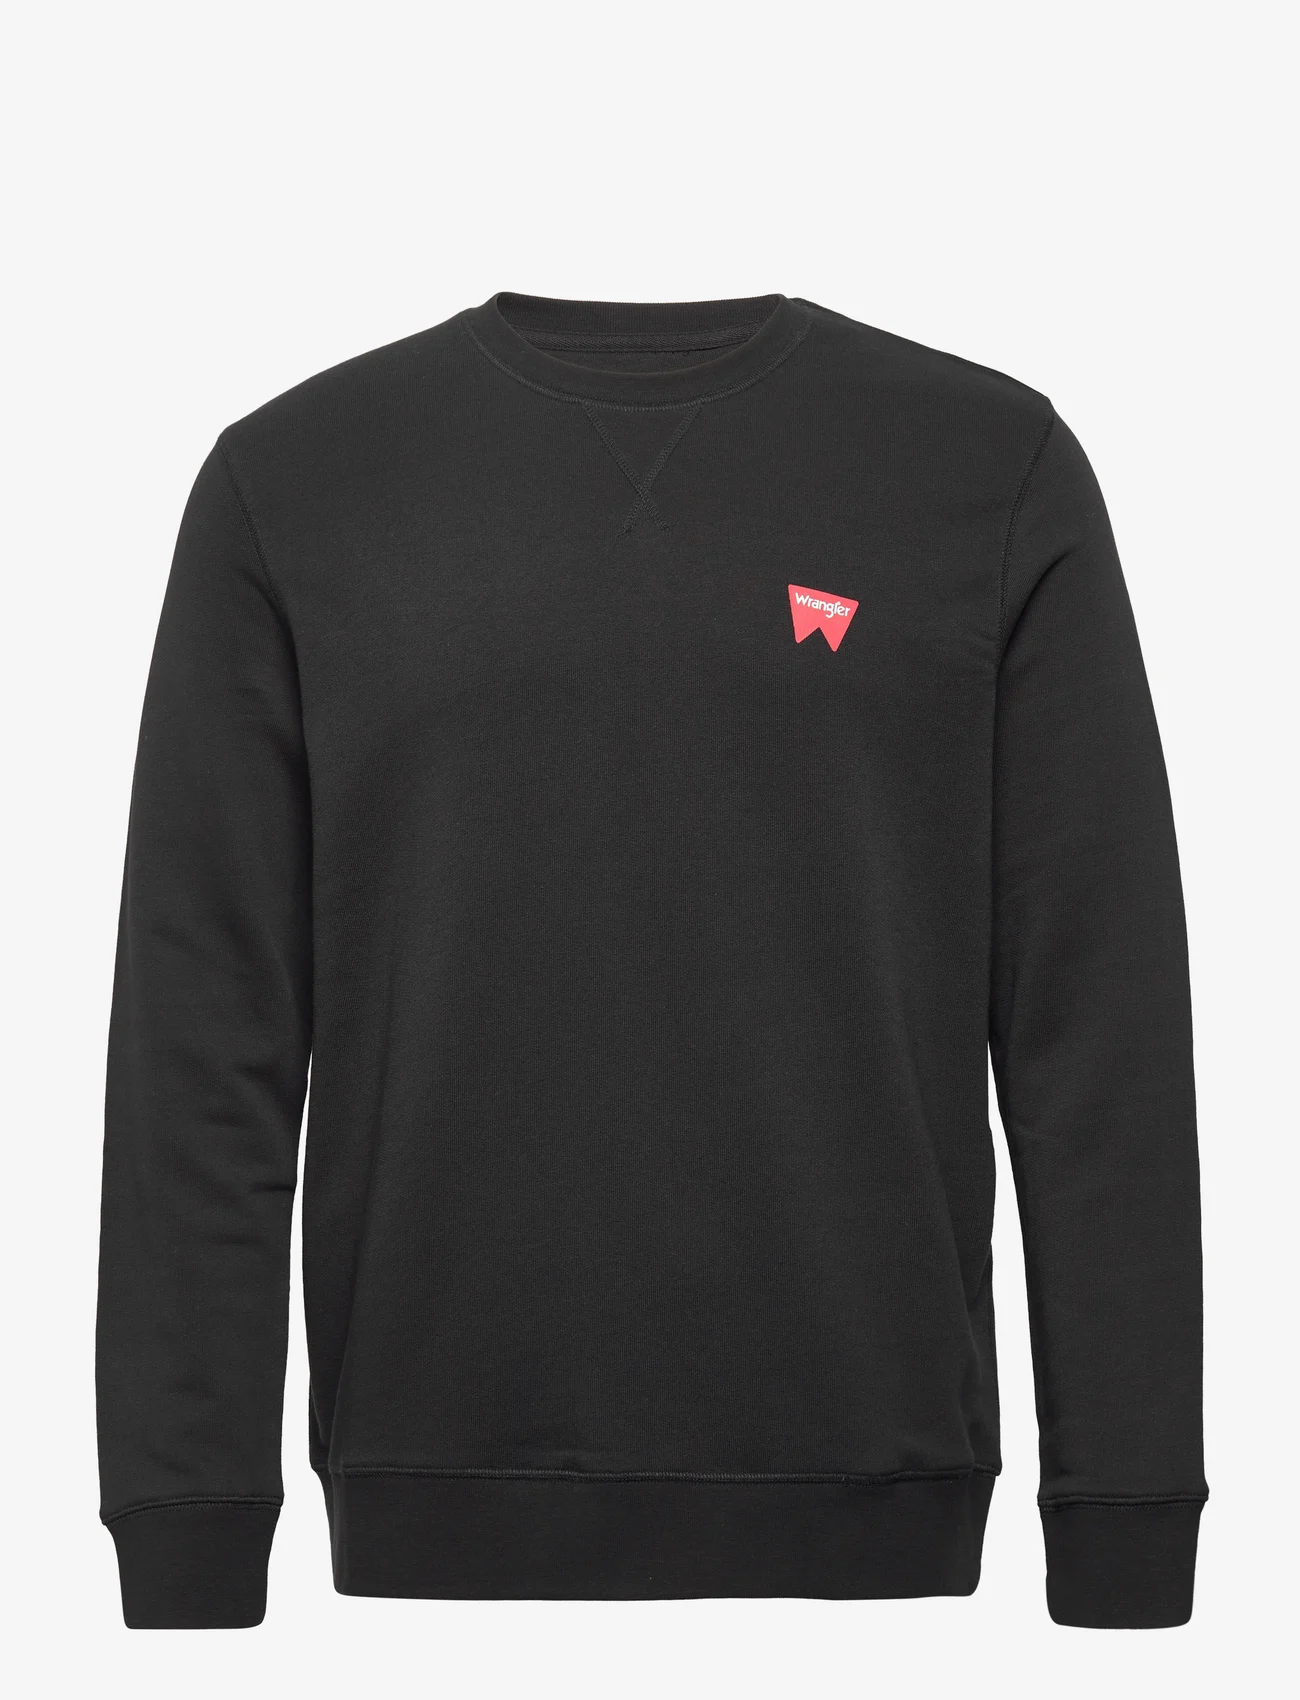 Wrangler - SIGN OFF CREW - sweatshirts - black - 0